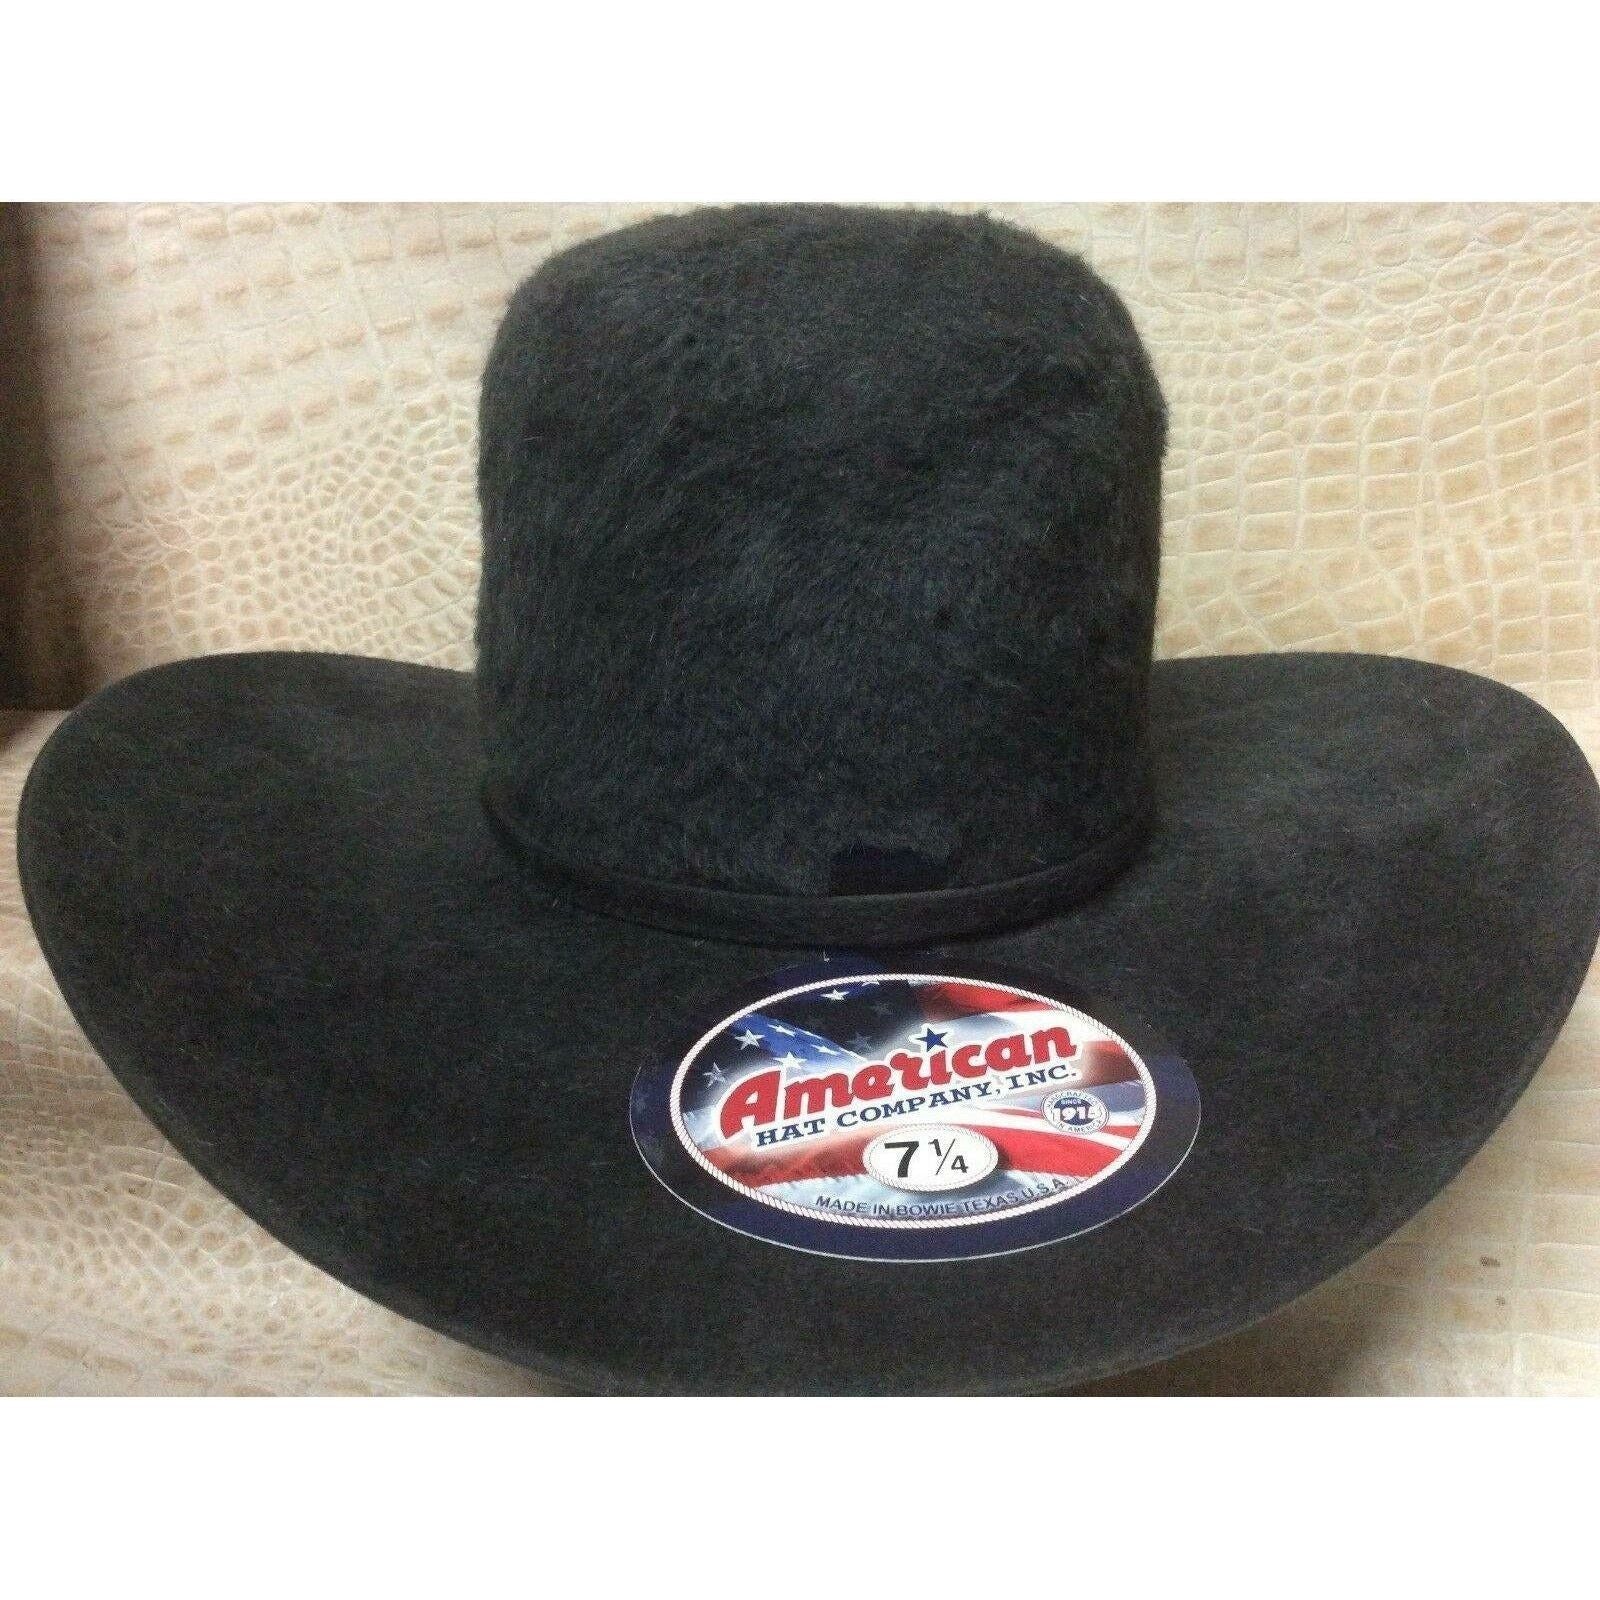 American Hat Co. Grizzly 20X Long Hair Beaver Fur Felt Cowboy Hat Western Rodeo - CWesternwear